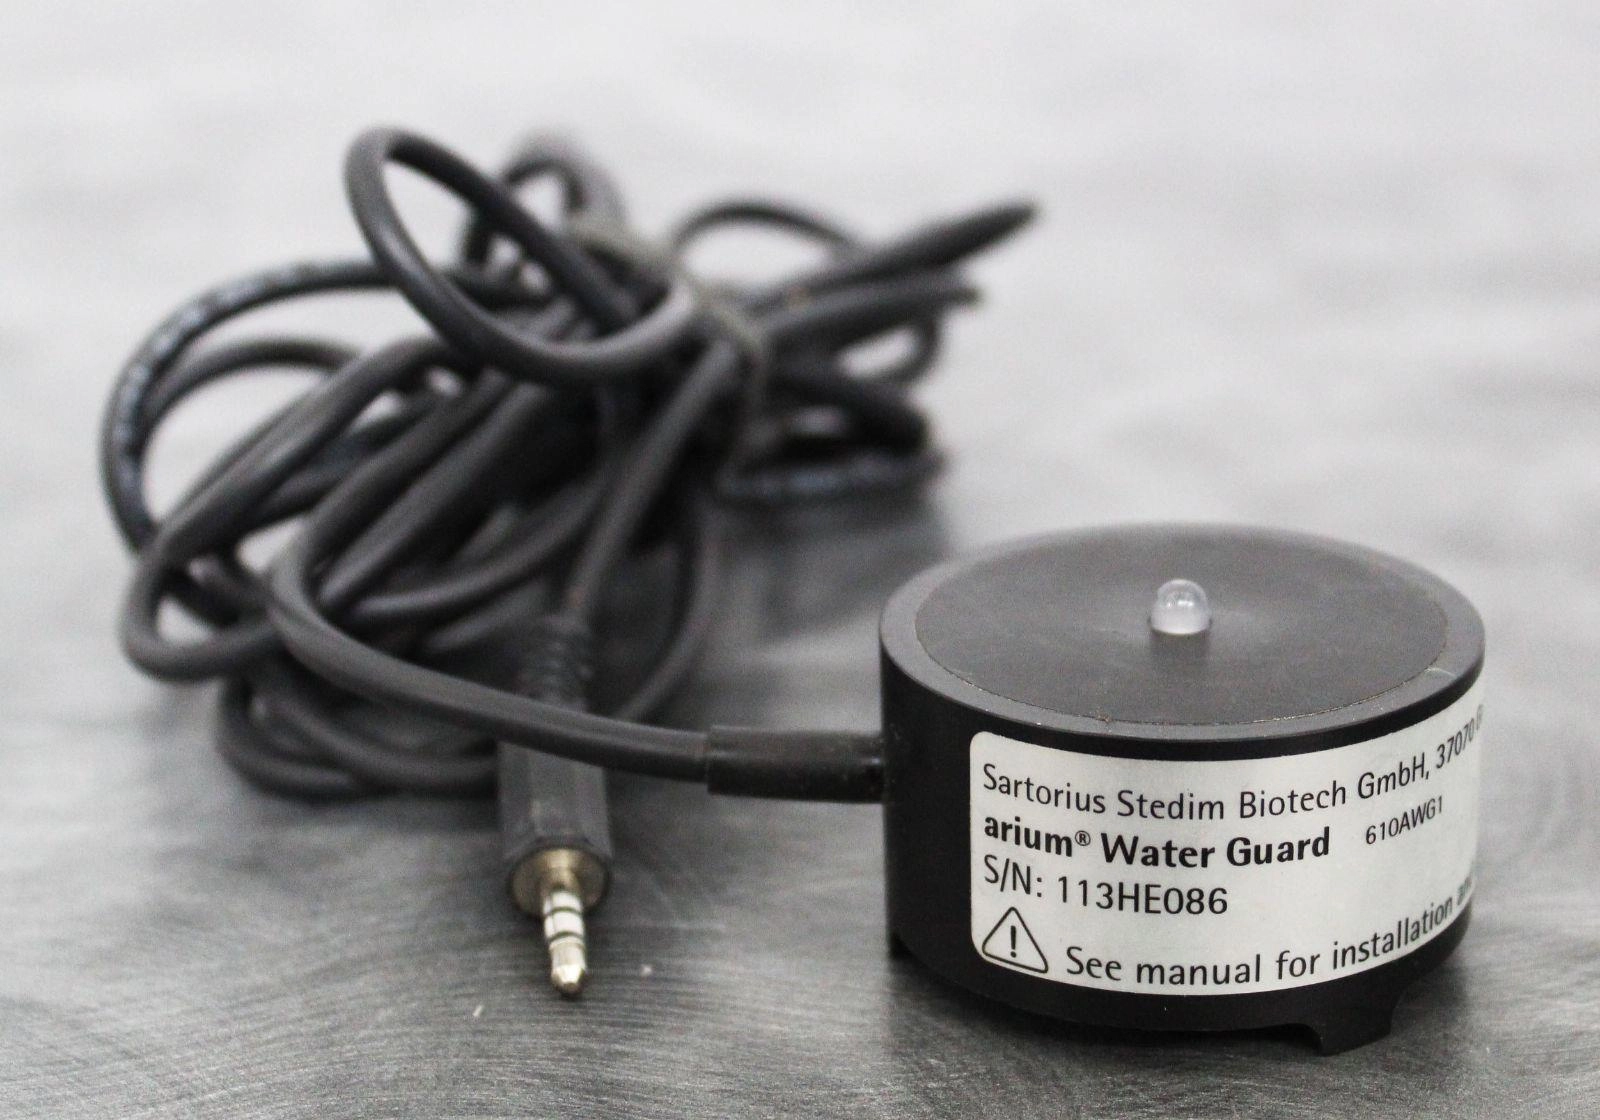 Sartorius 610AWG1 Arium Water Guard Sensor with 90-Day Warranty